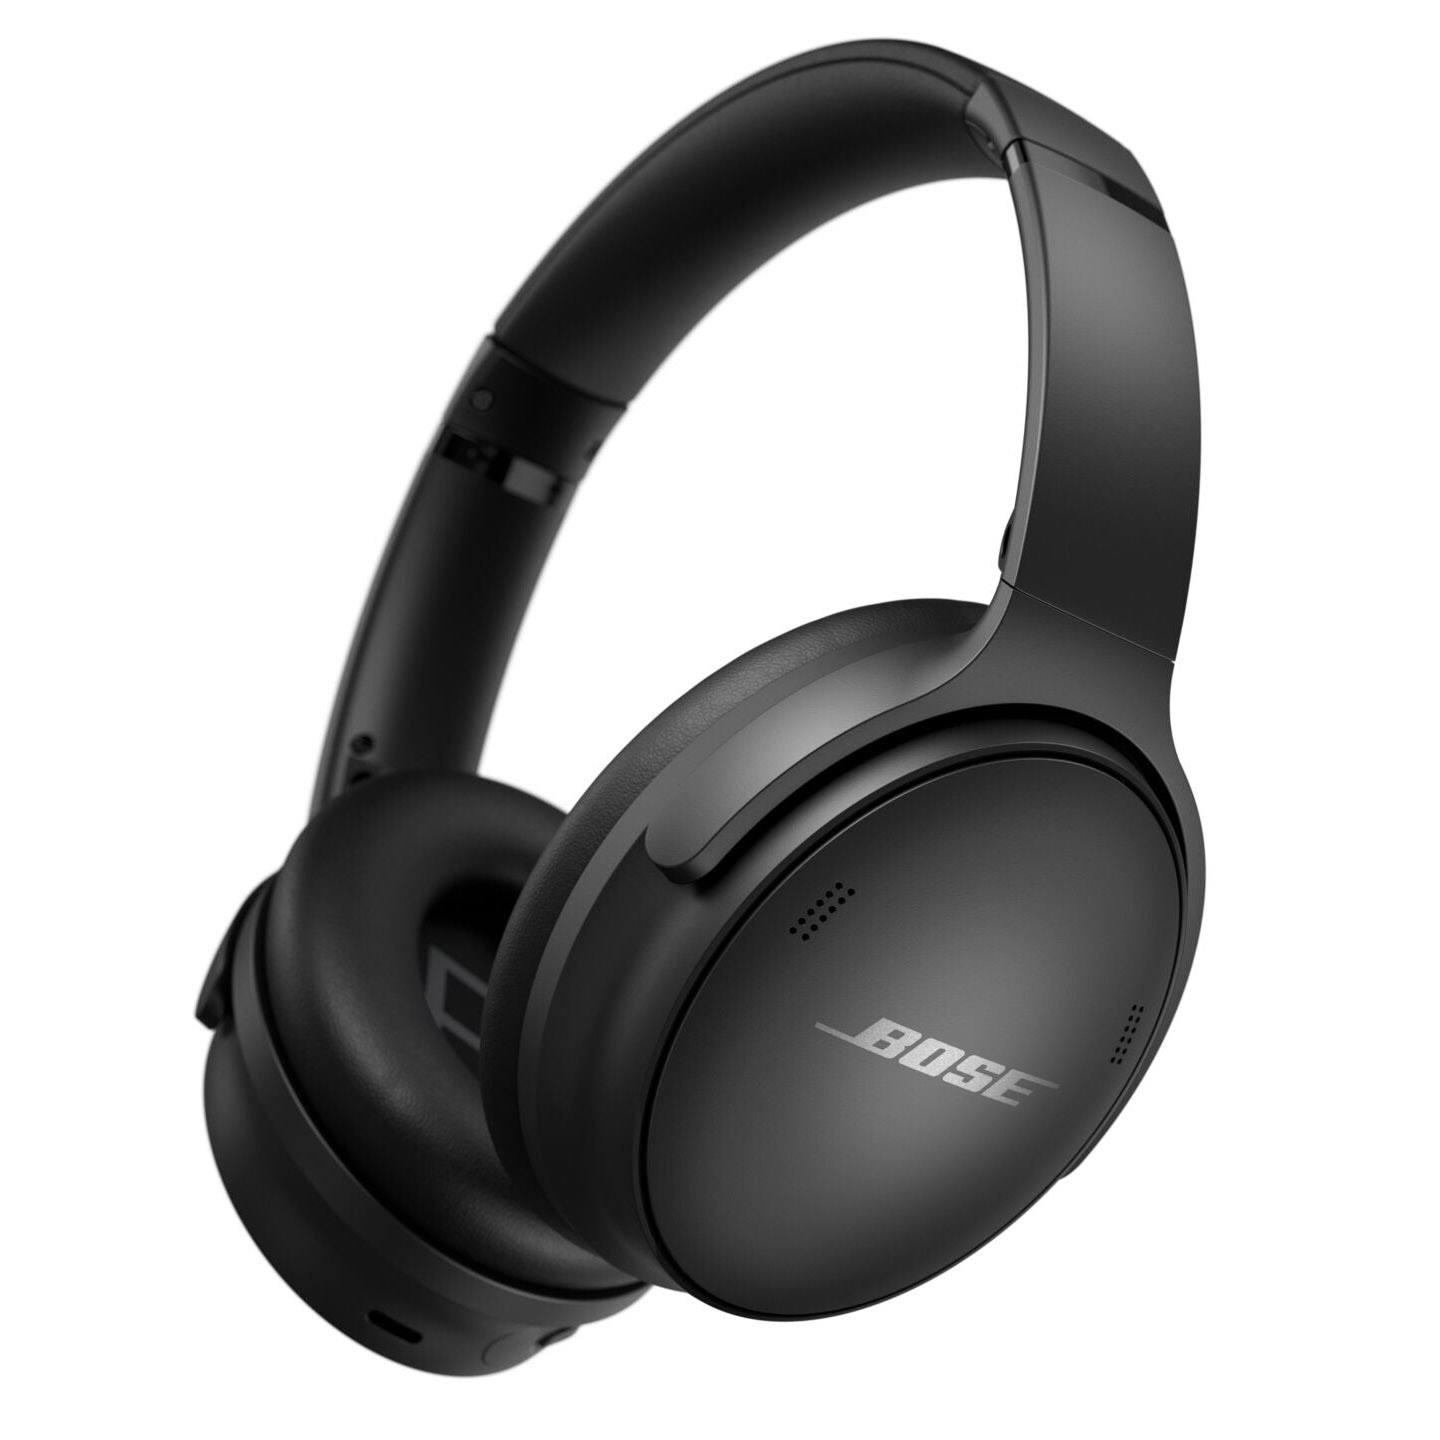 Bose QuietComfort Headphones (Black)